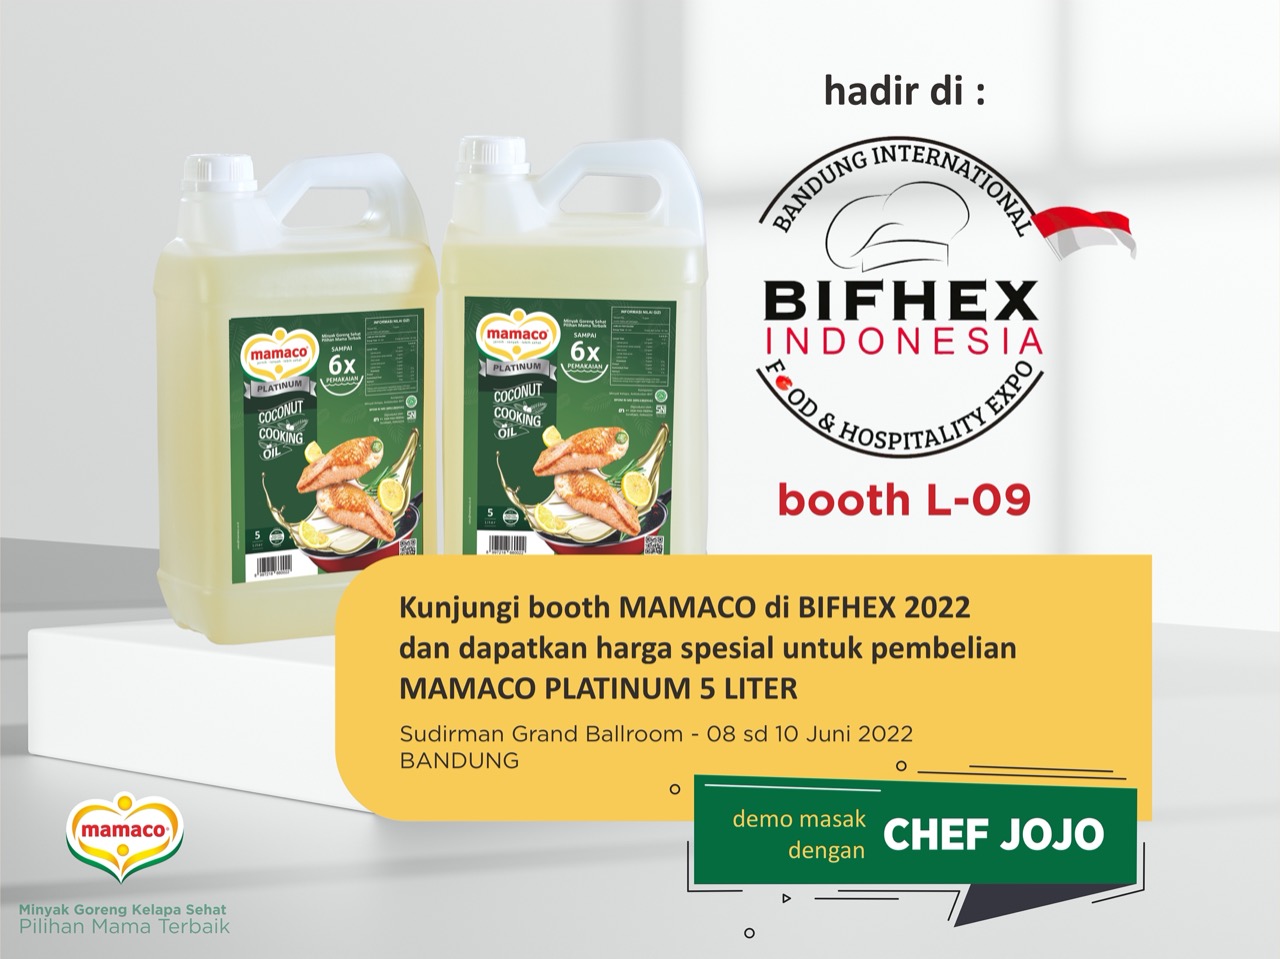 Food Expo : Bandung International Food & Hospitality (BIFHEX) - Mamaco